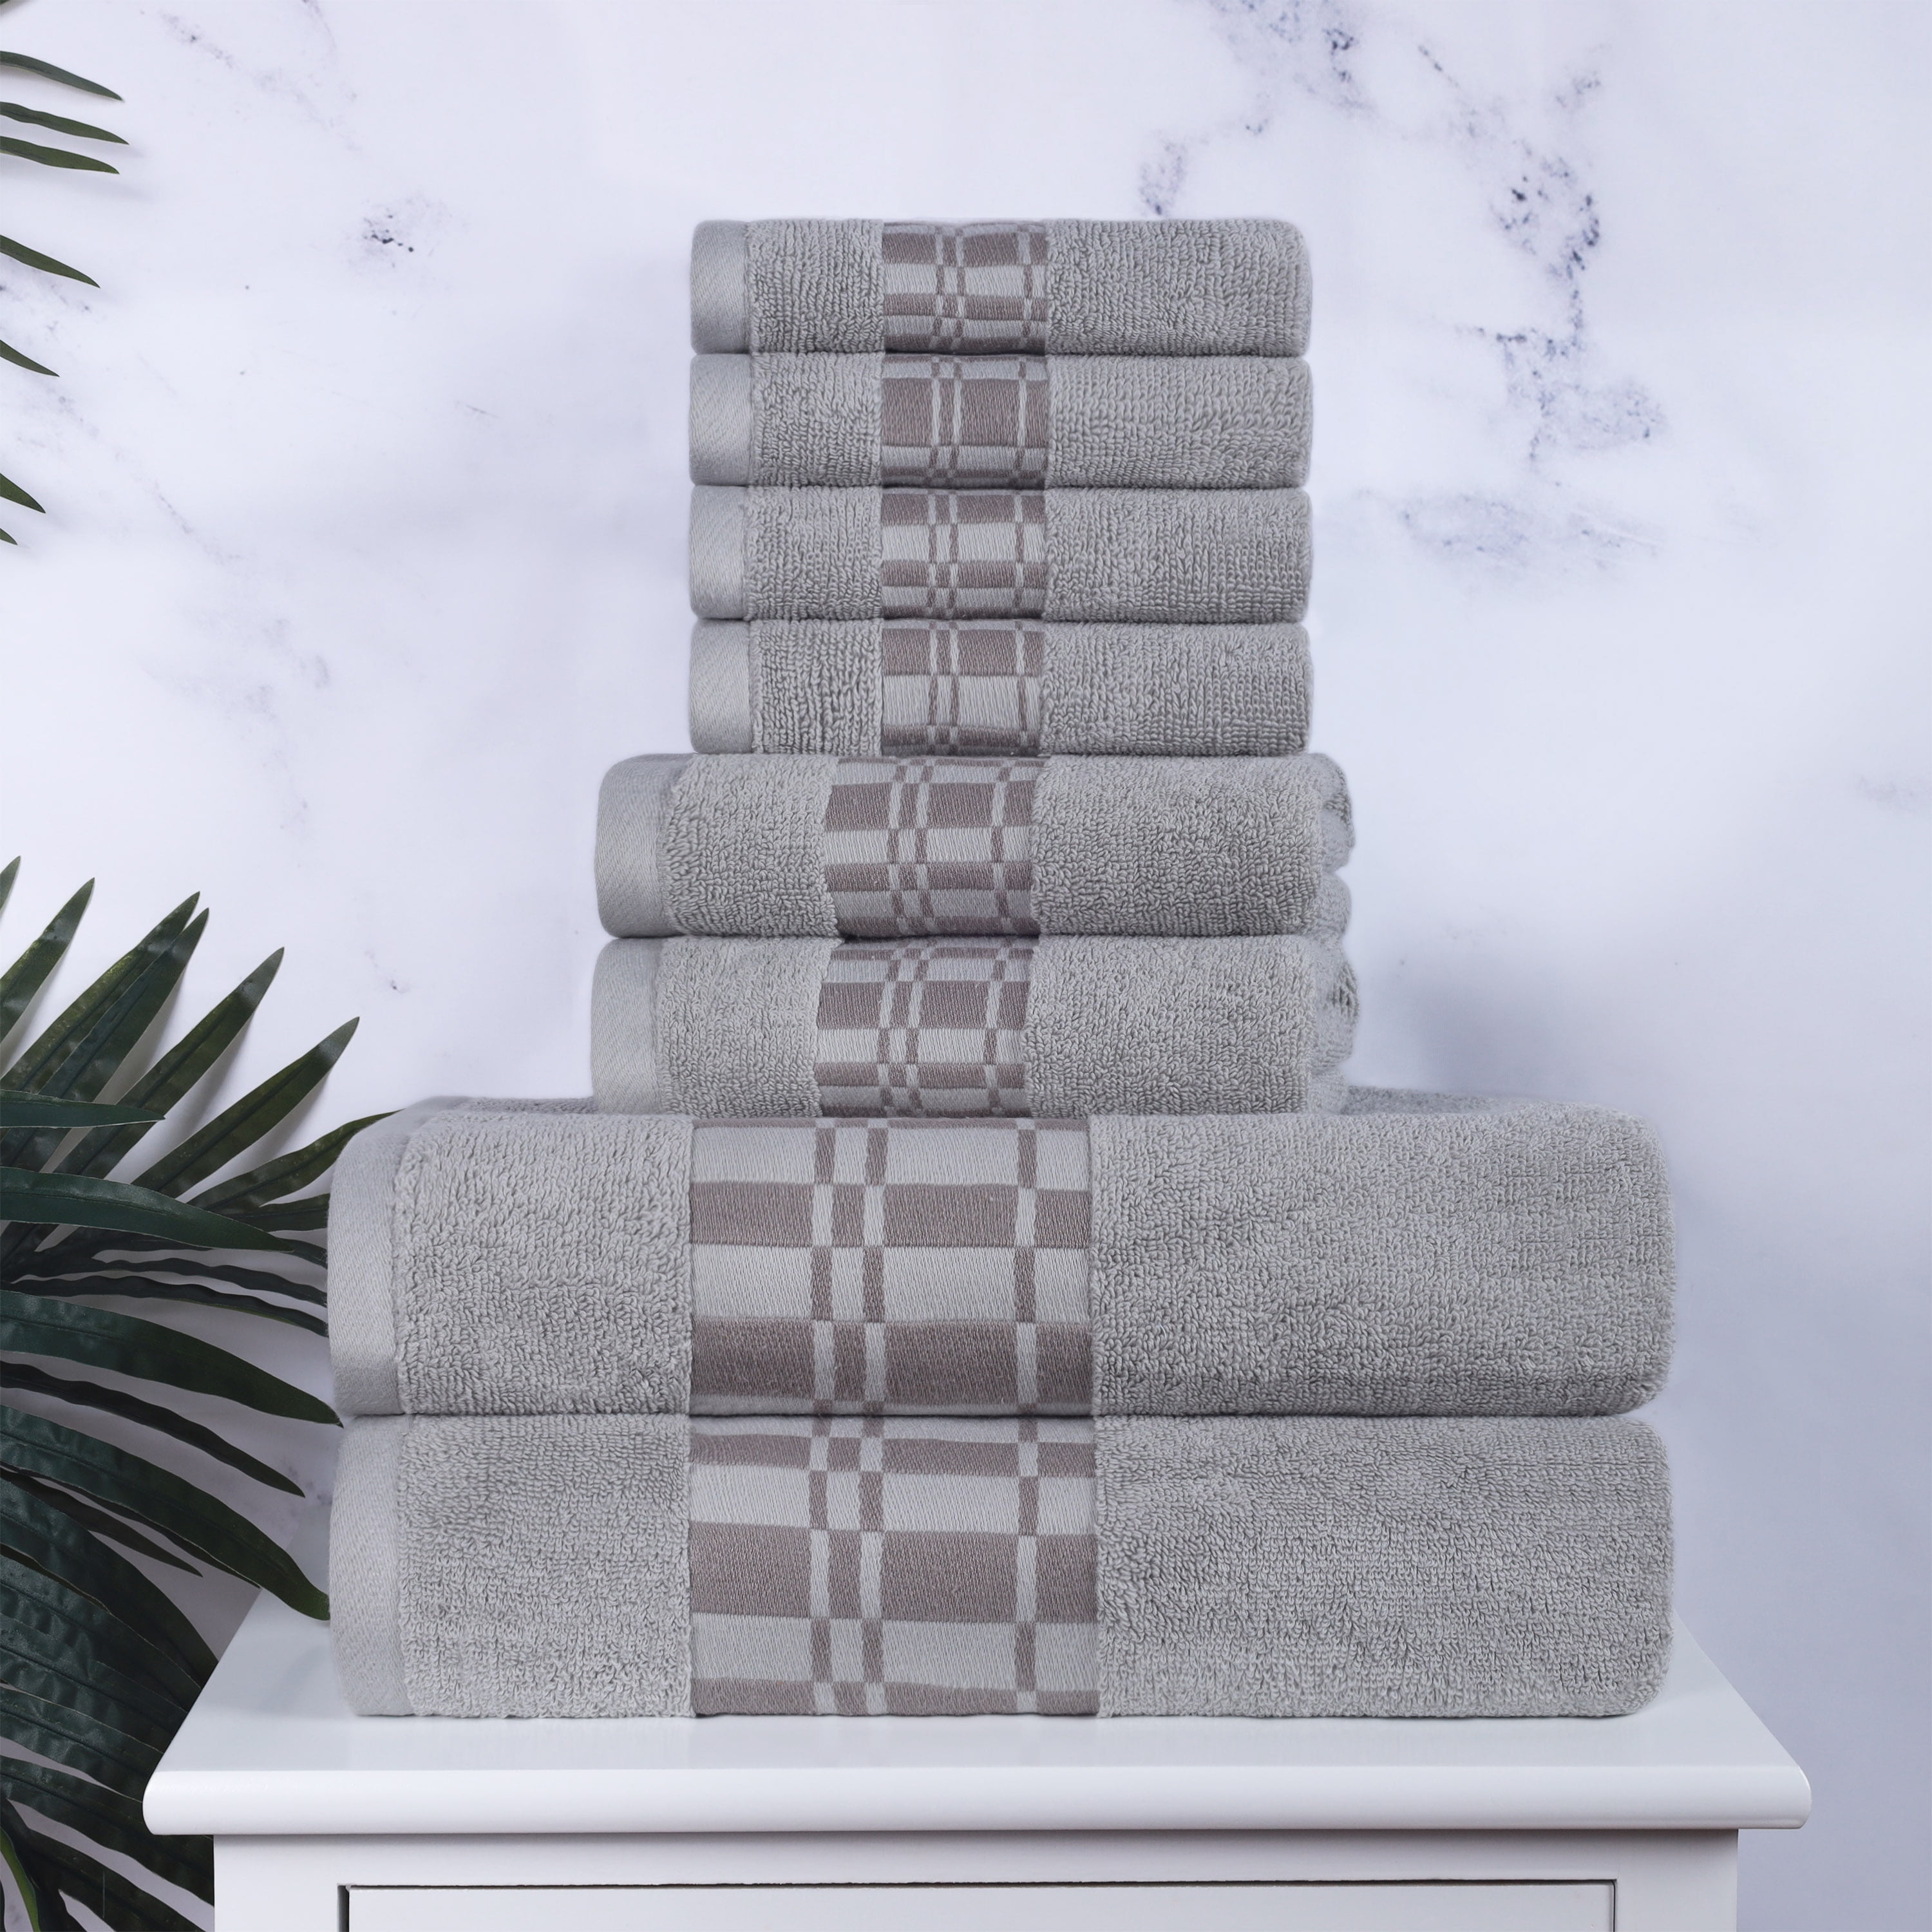 Decorative Assorted 8-Piece Cotton Luxury Bath Towel Set for Bathroom, 13  x 13”, 16” x 30”, 30” x 52”, Coral by Blue Nile Mills